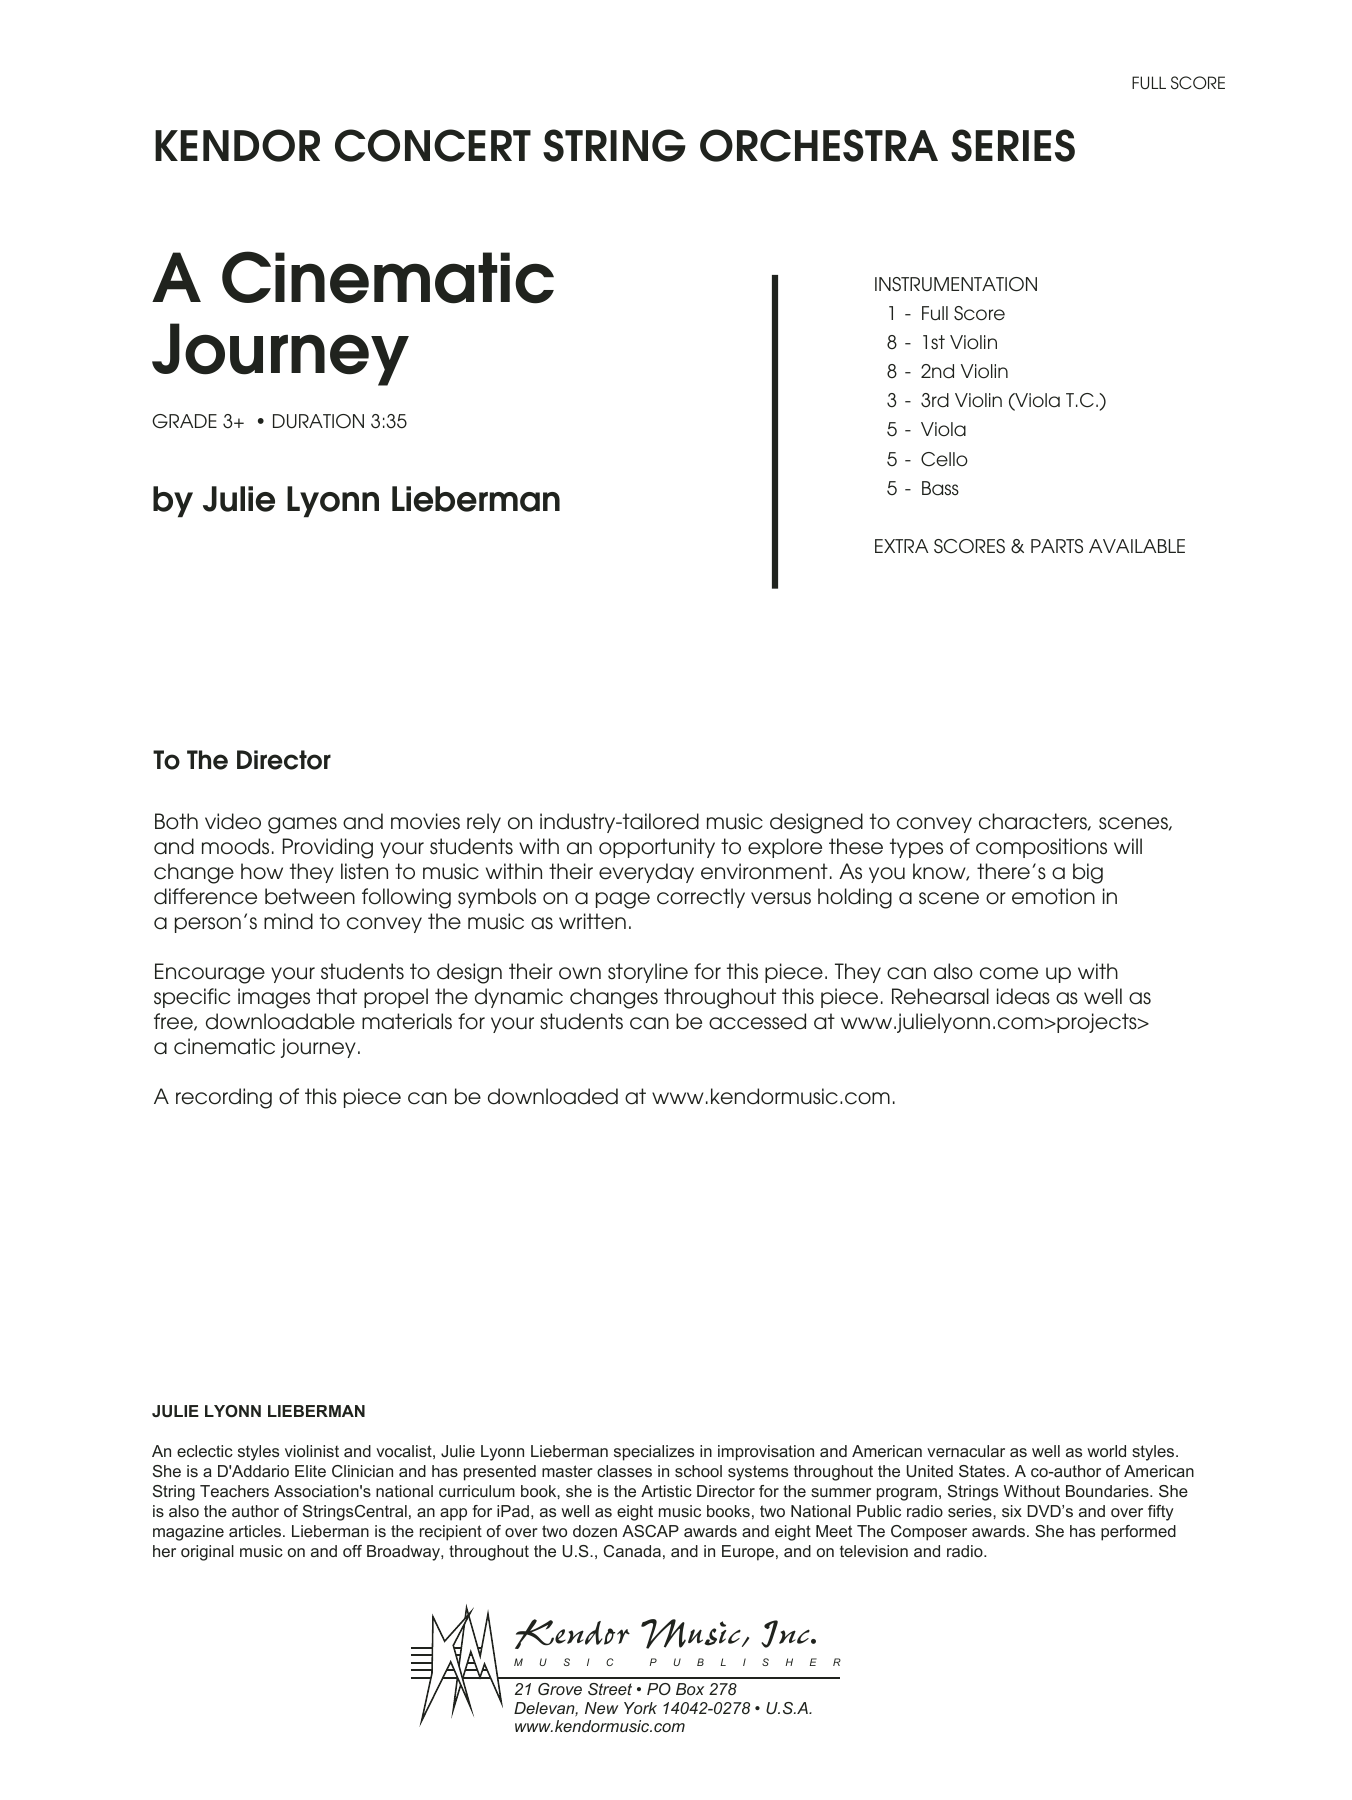 Download Julie Lyonn Lieberman A Cinematic Journey - Full Score Sheet Music